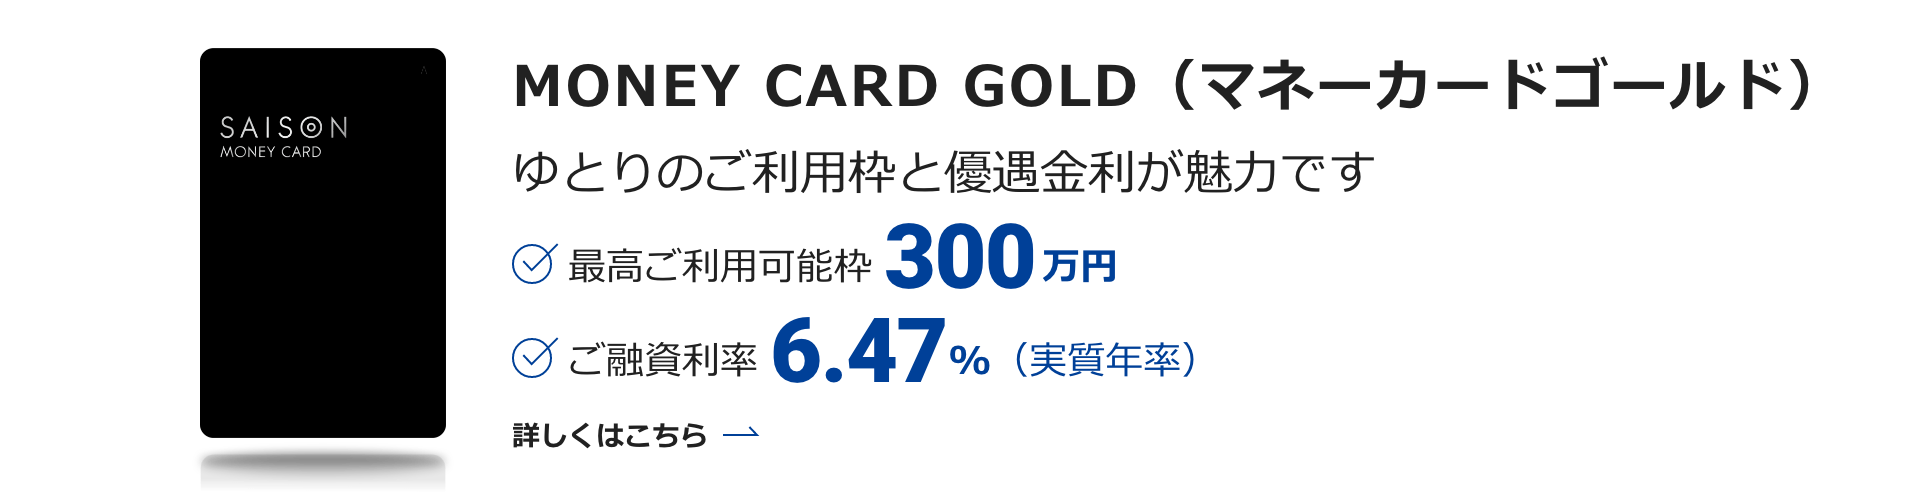 MONEY CARD GOLD（マネーカードゴールド）|ゆとりのご利用枠と優遇金利が魅力です。|最高ご利用可能枠300万円|ご融資率6.47%(実質年率)